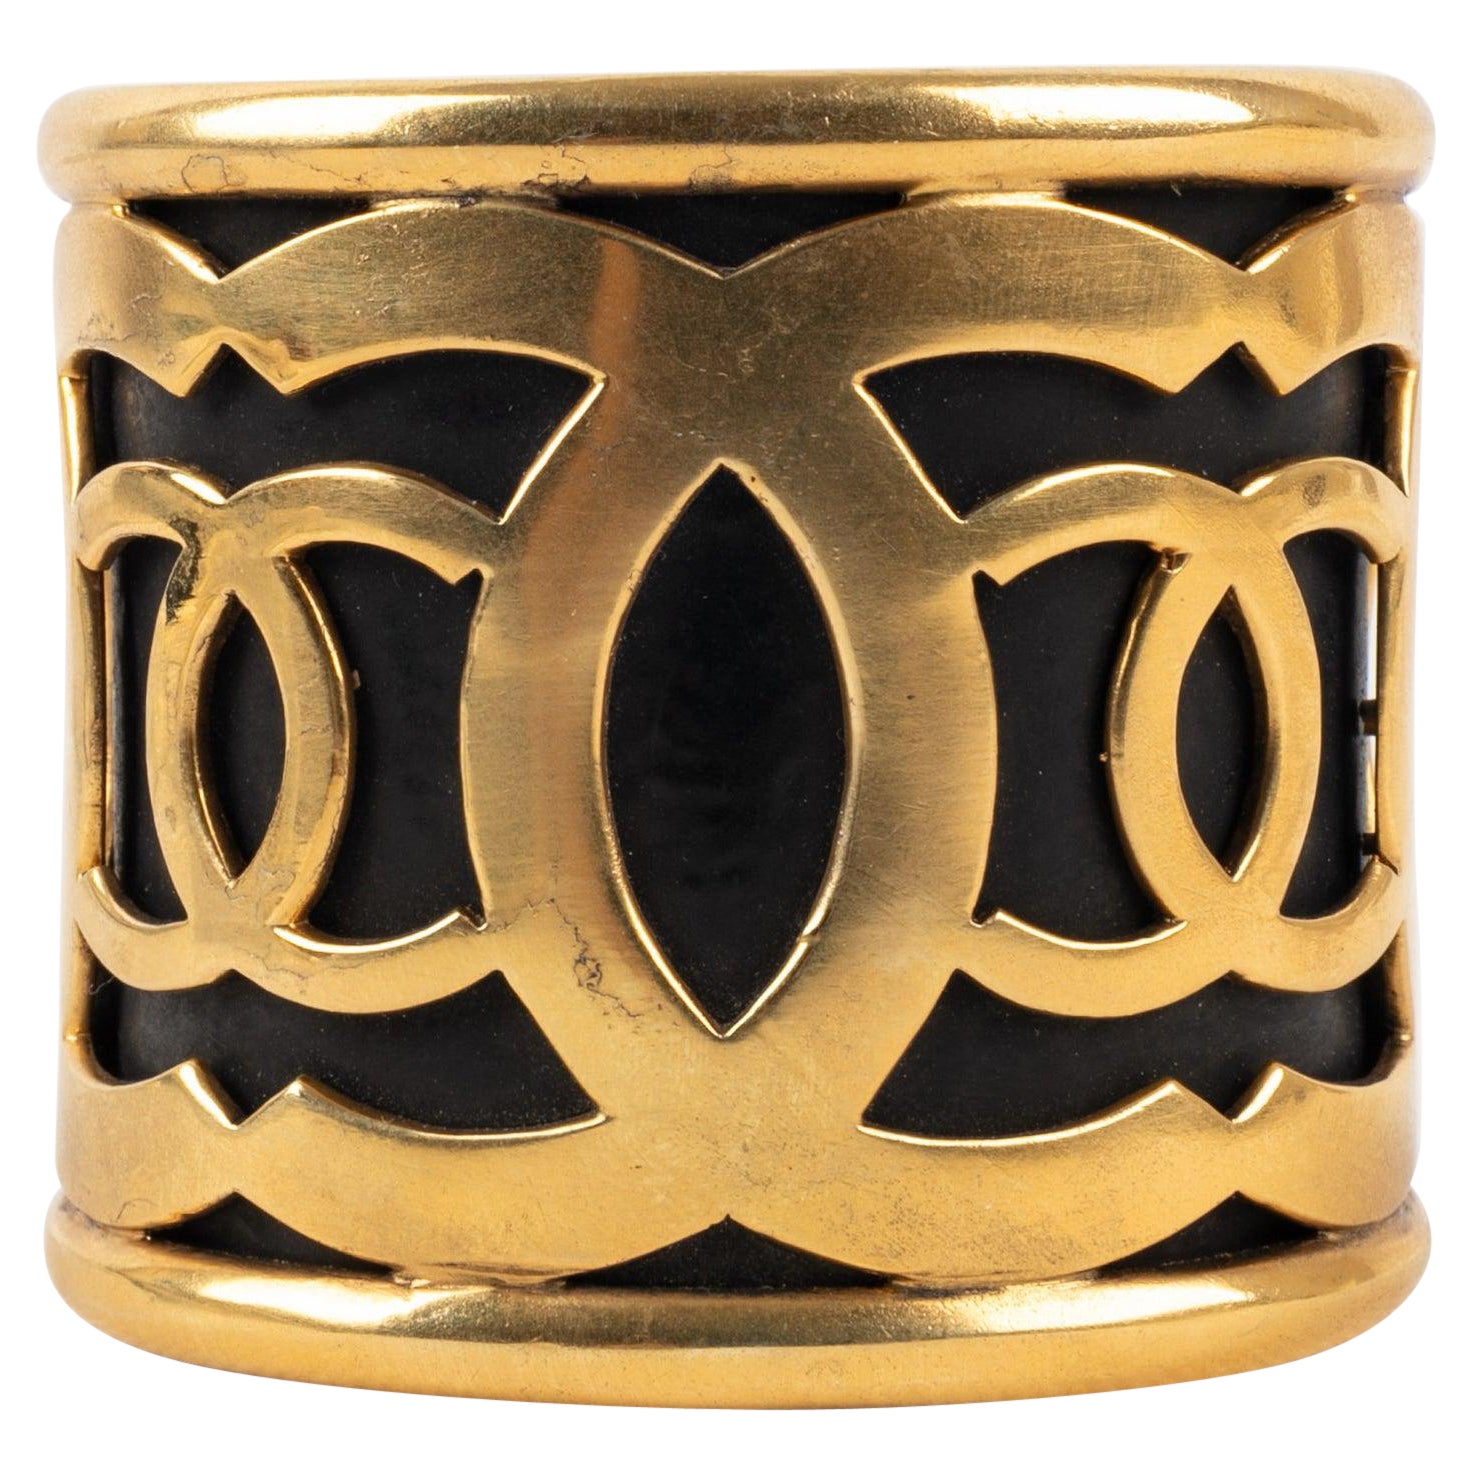 Chanel Cuff Bracelet in Golden Metal on a Black Background For Sale